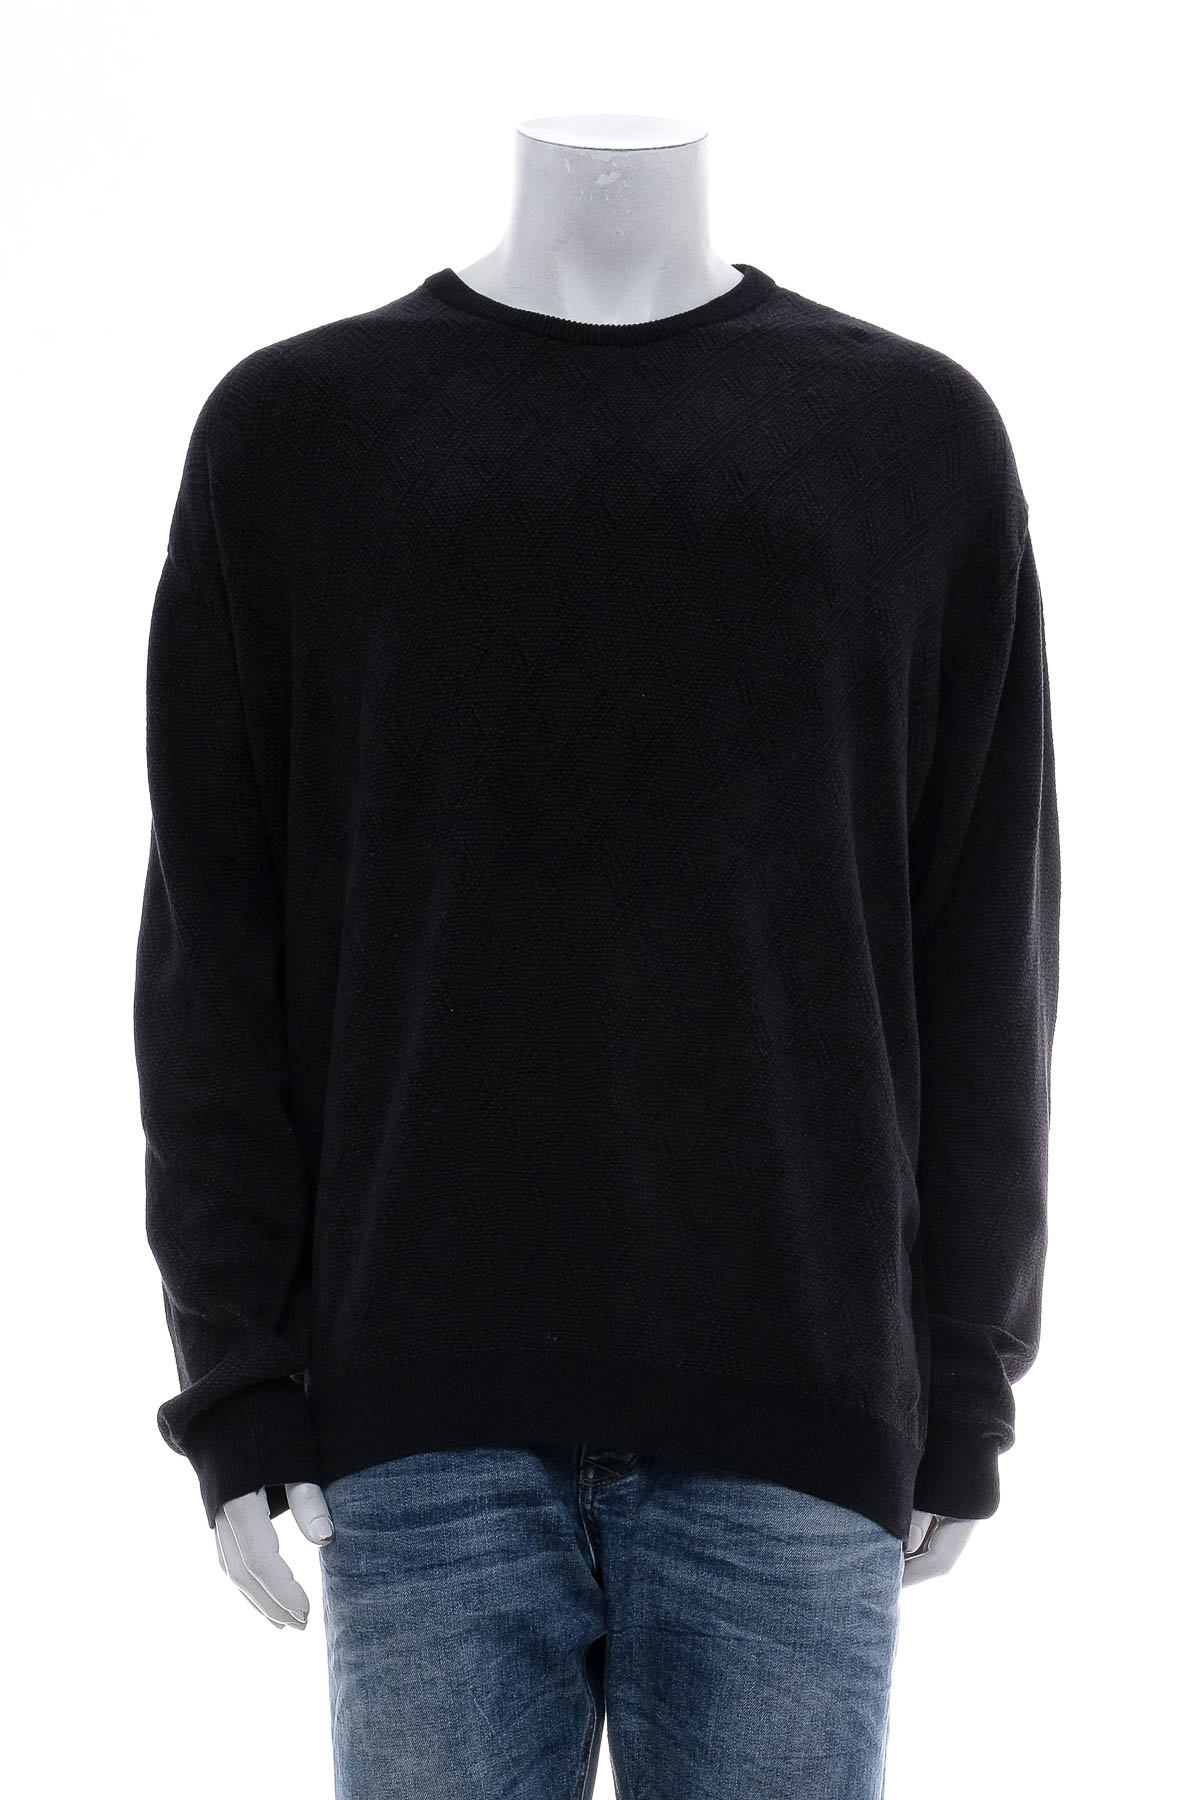 Men's sweater - Cottonreal - 0